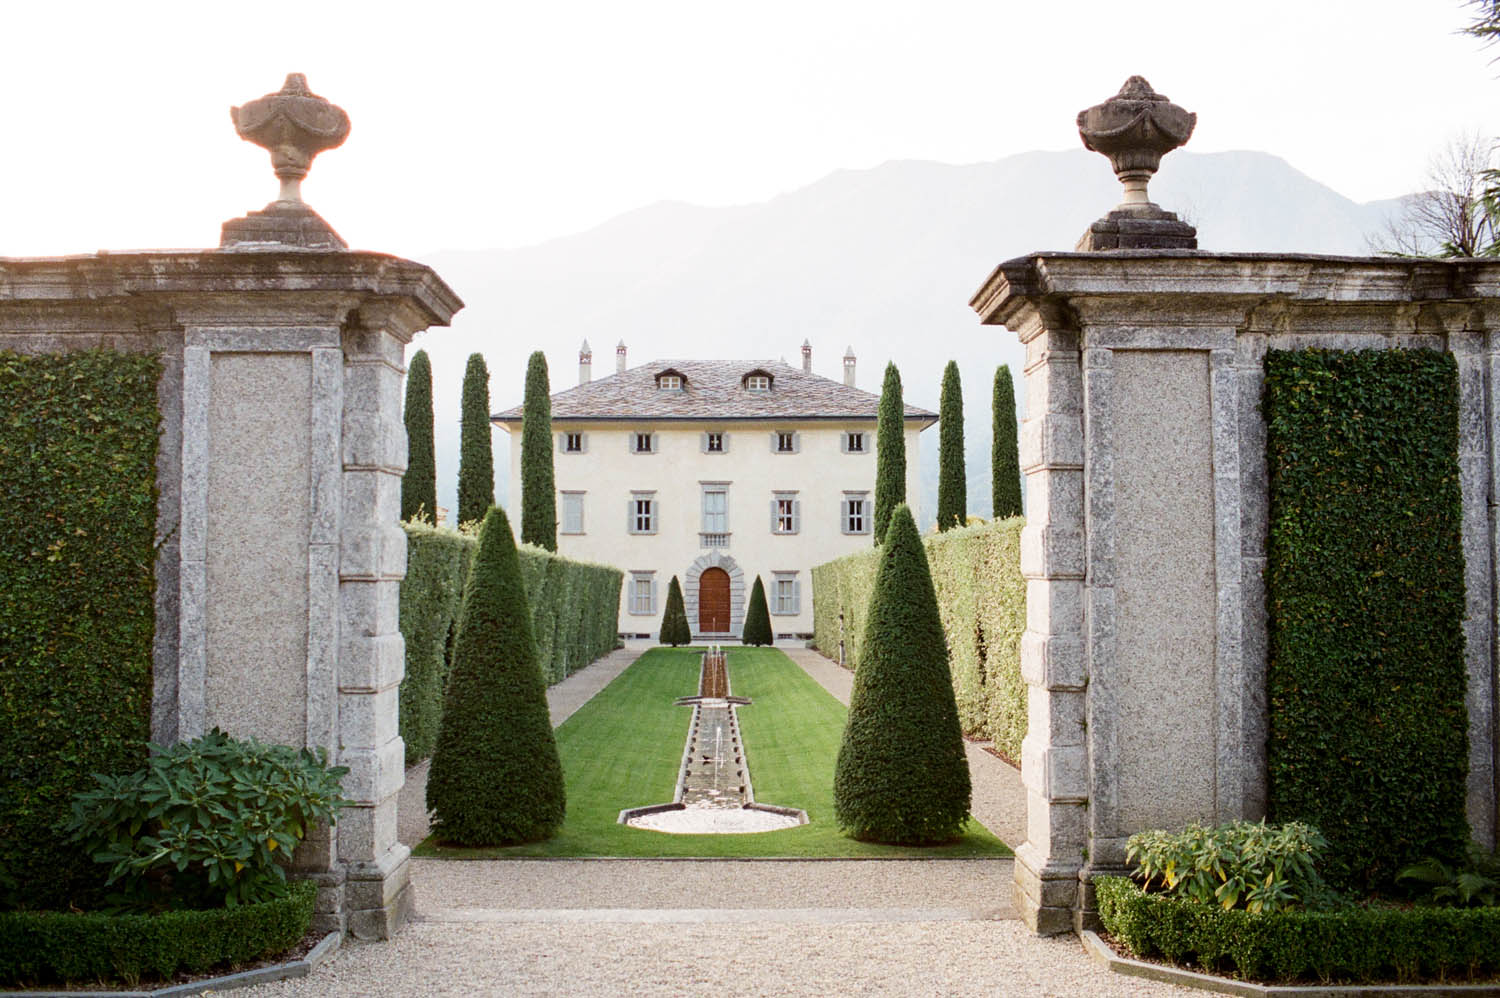 villa in Italy for destination wedding | Wedifys